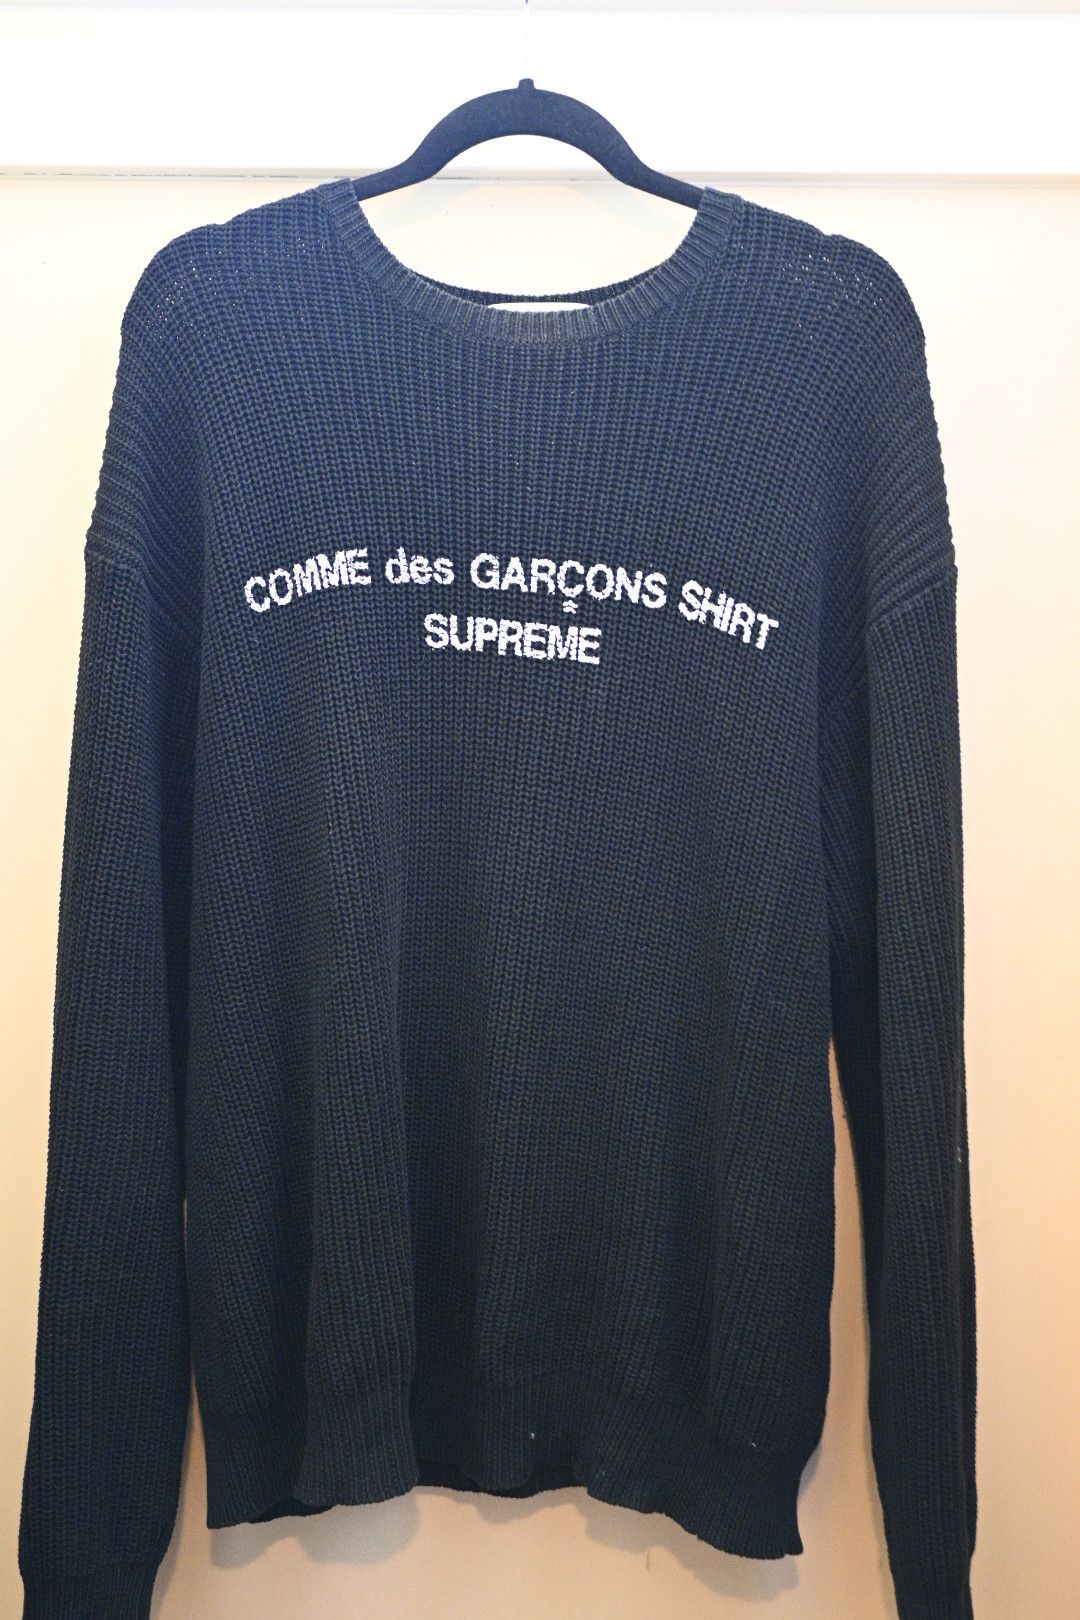 Supreme Supreme Comme Des Garcons SHIRT Knit Sweater | Grailed